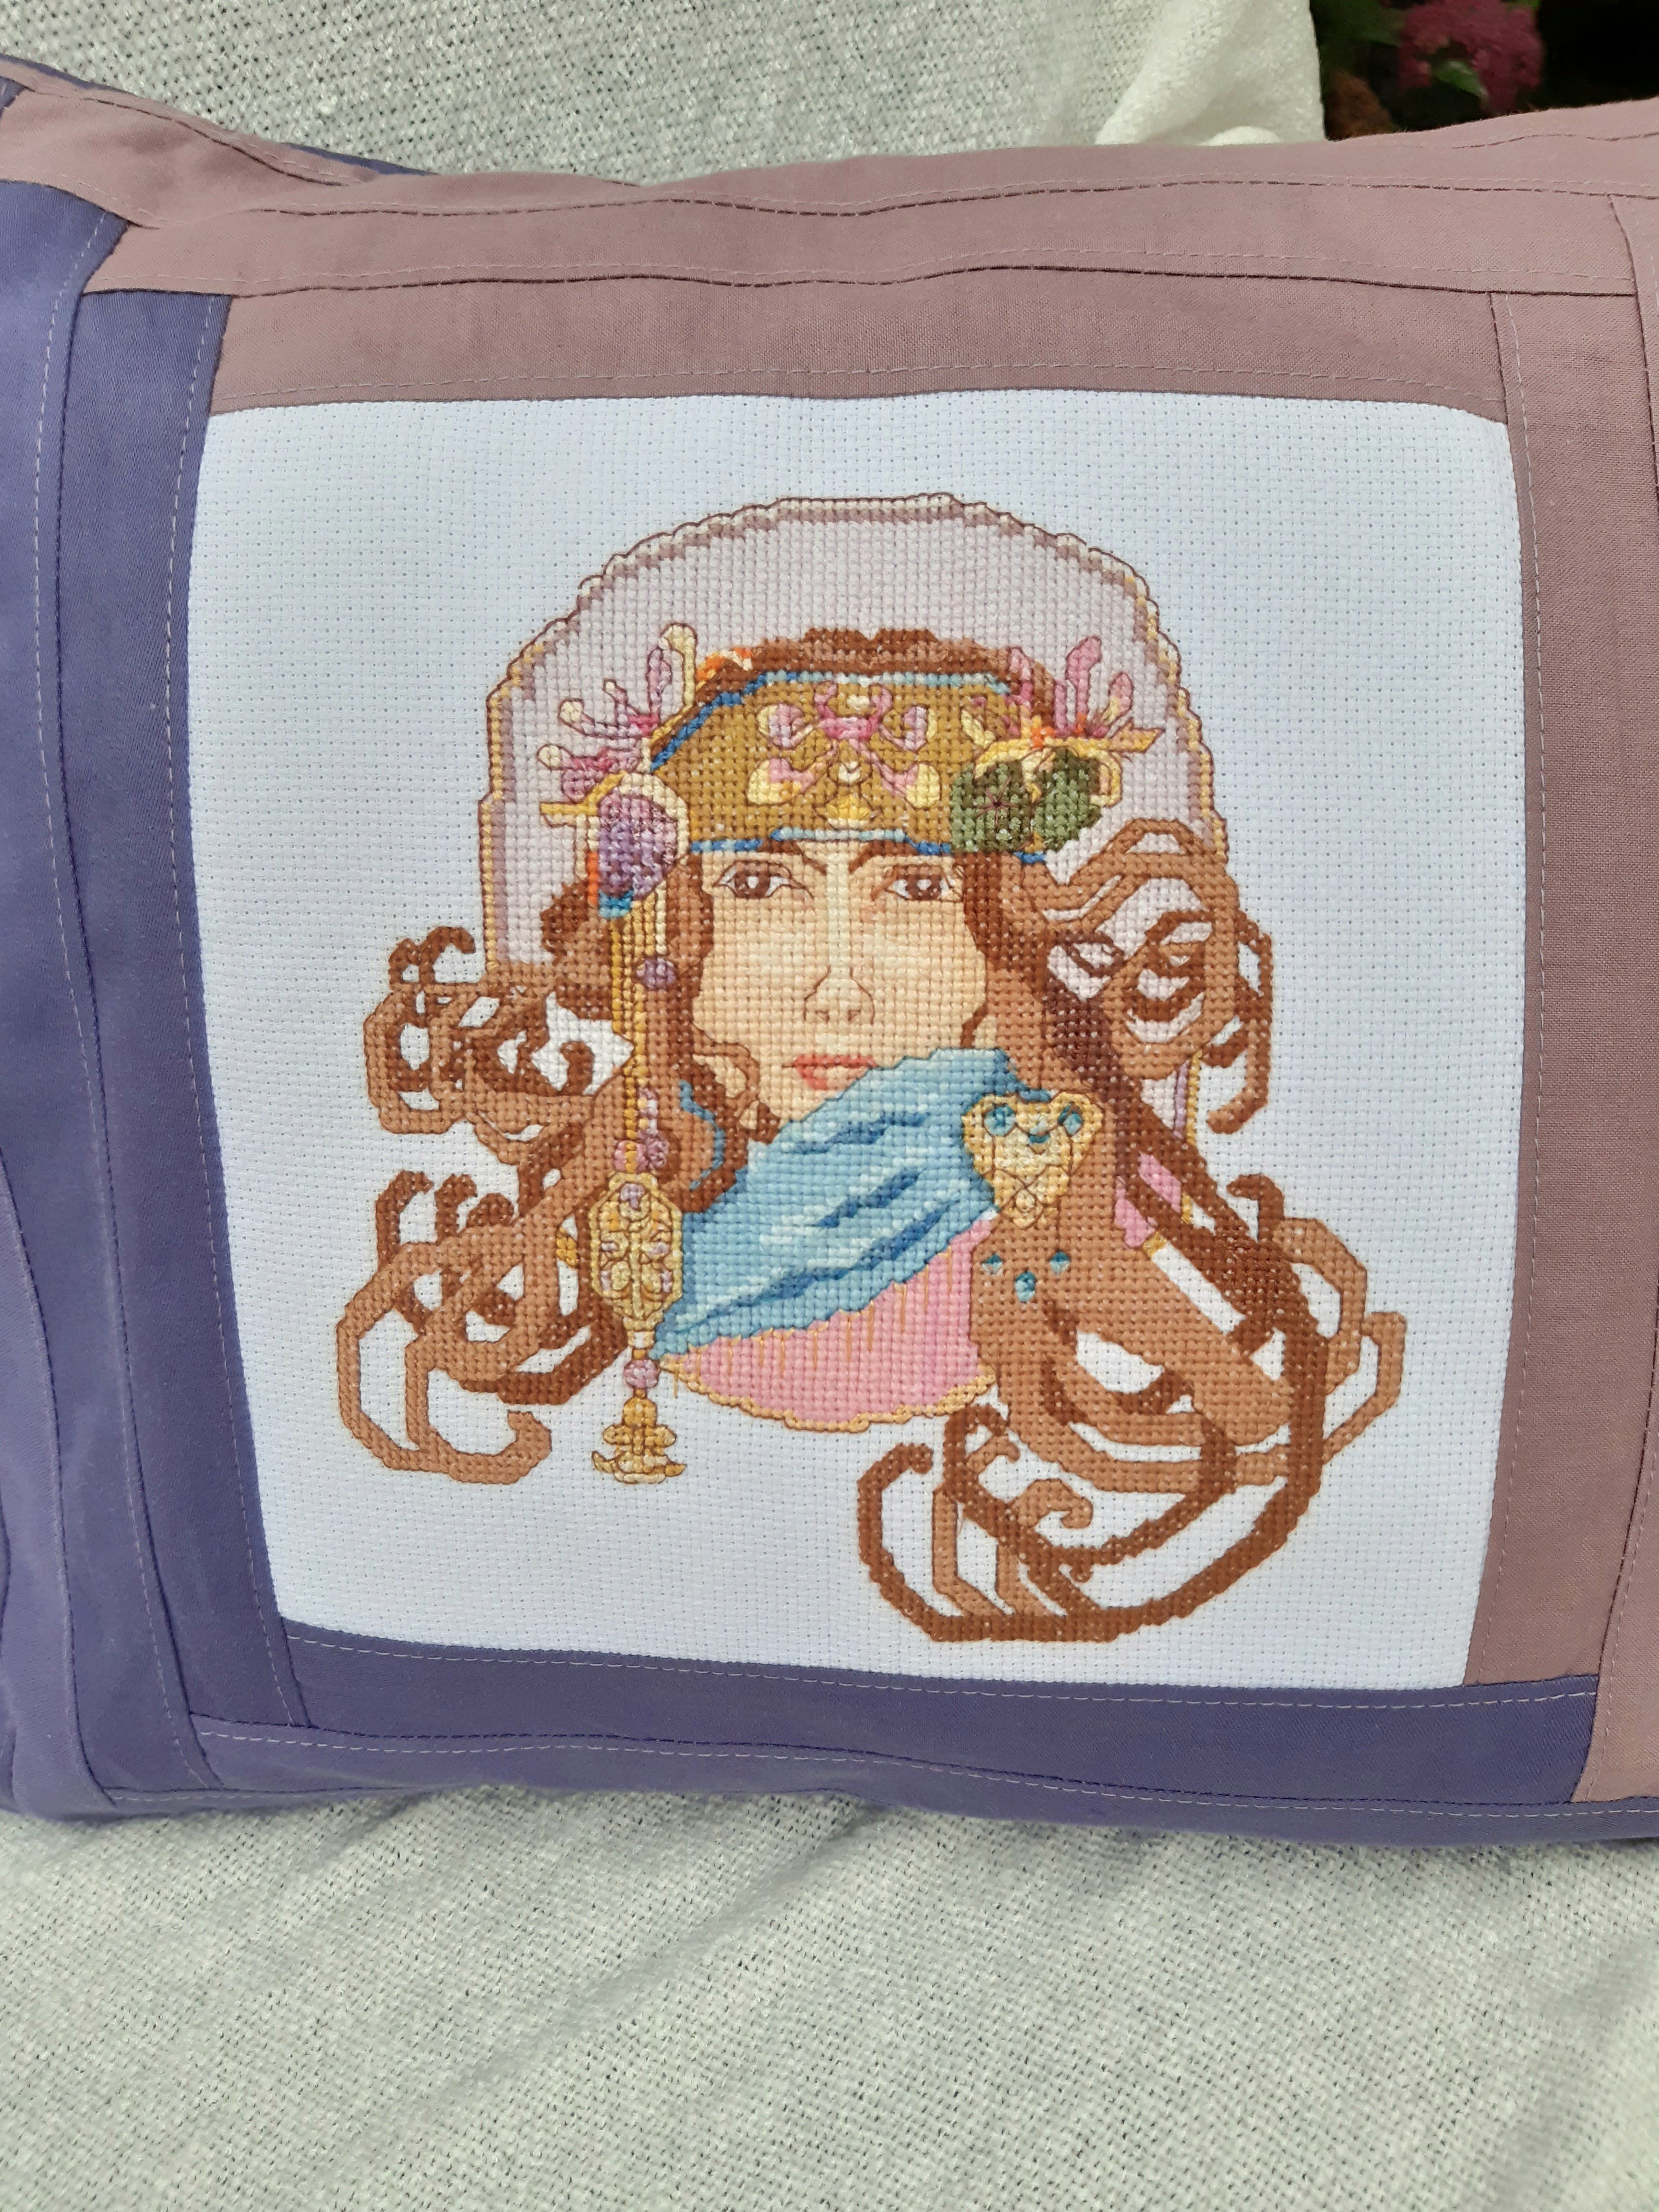 Art Nouveau inspired cross-stitch cushion cover